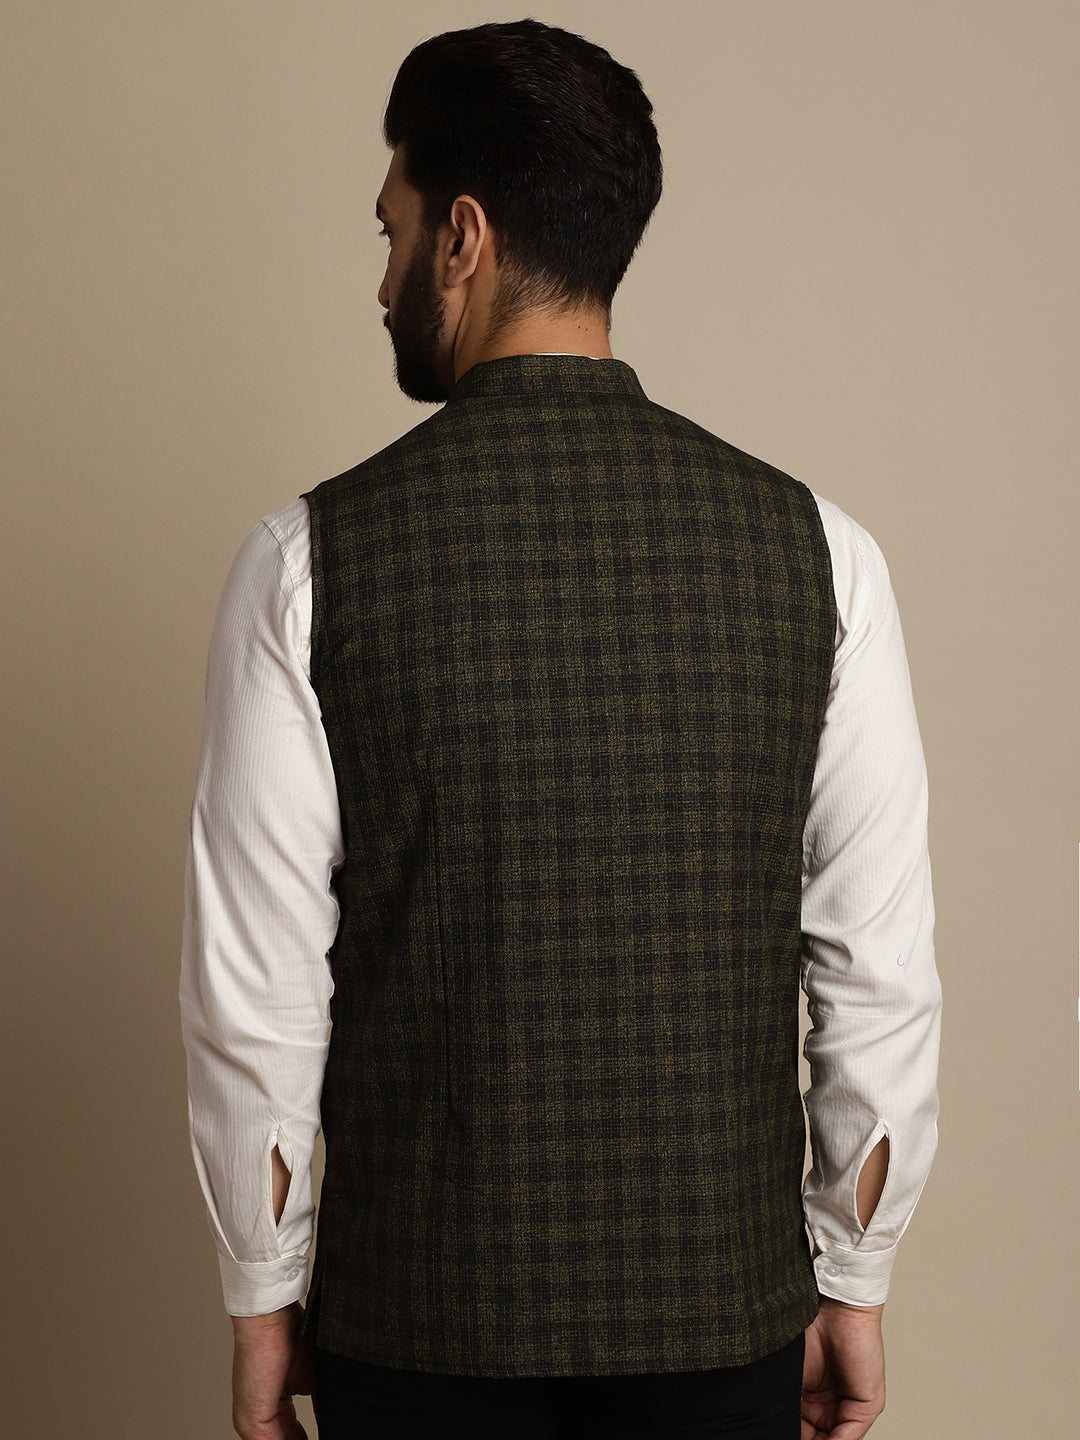 Men's Mandarin Collar Waistcoat - Even Apparels